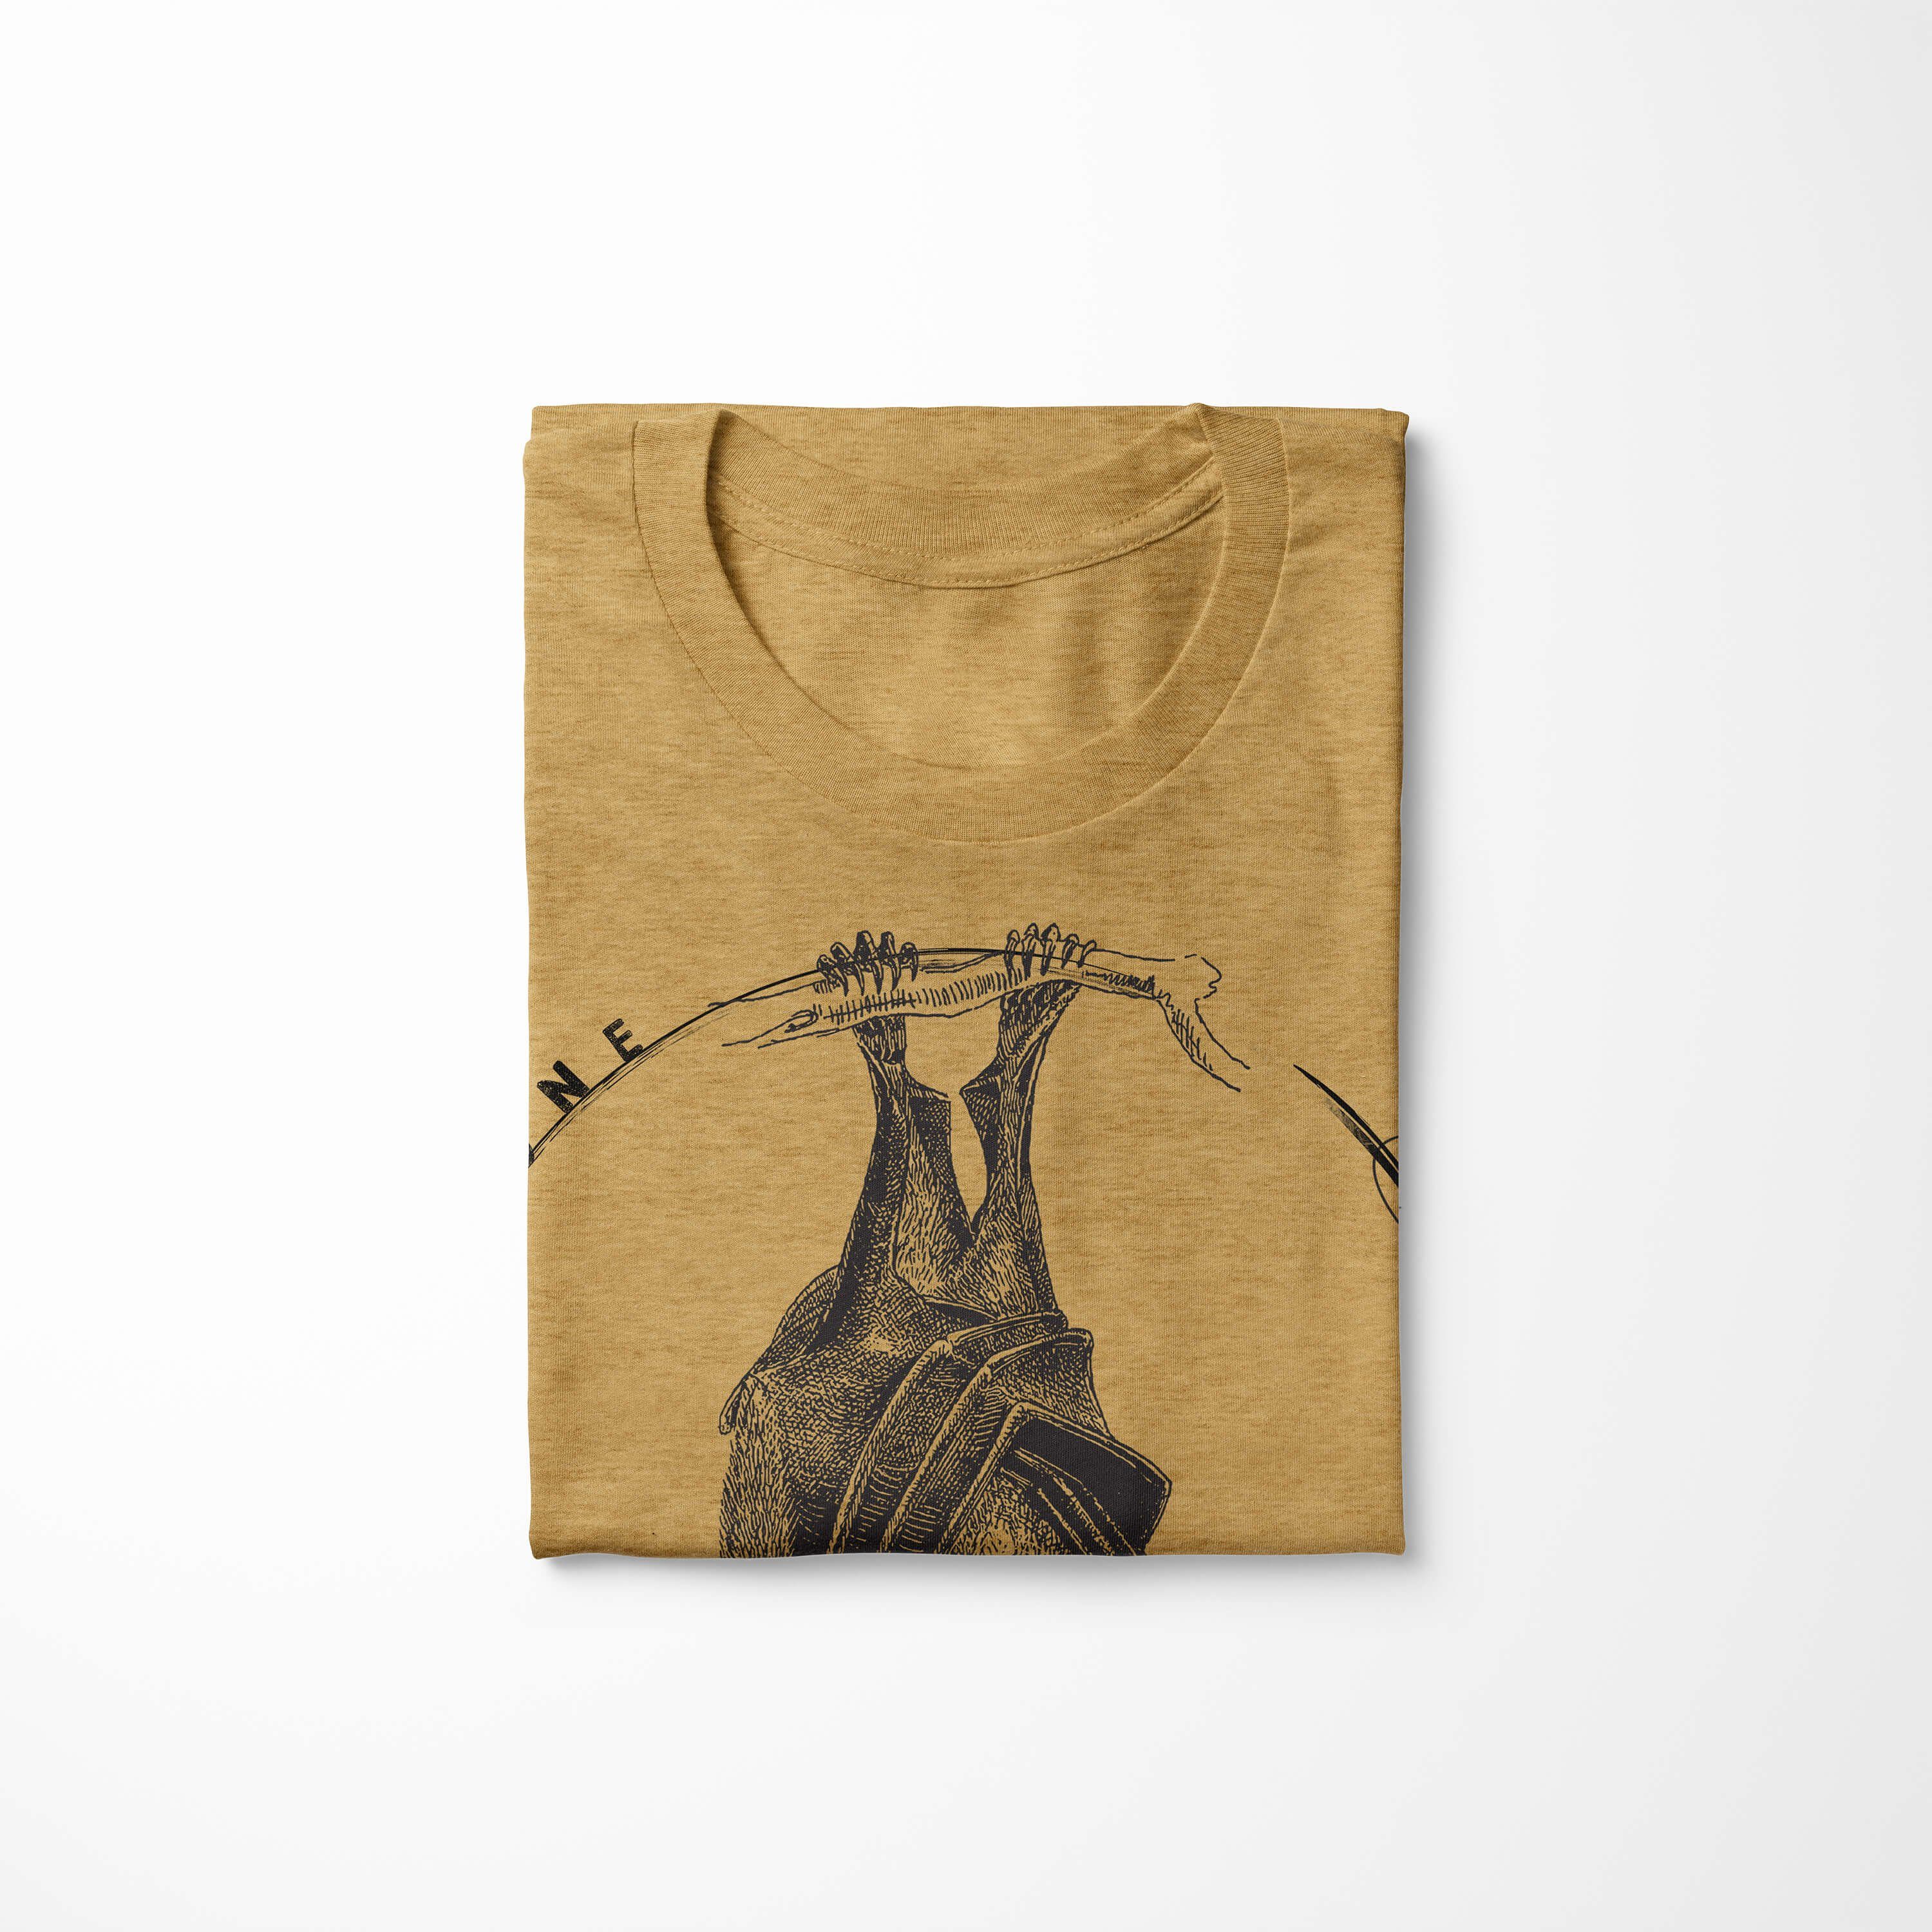 Herren Antique Art Sinus Fledermaus Gold T-Shirt T-Shirt Evolution